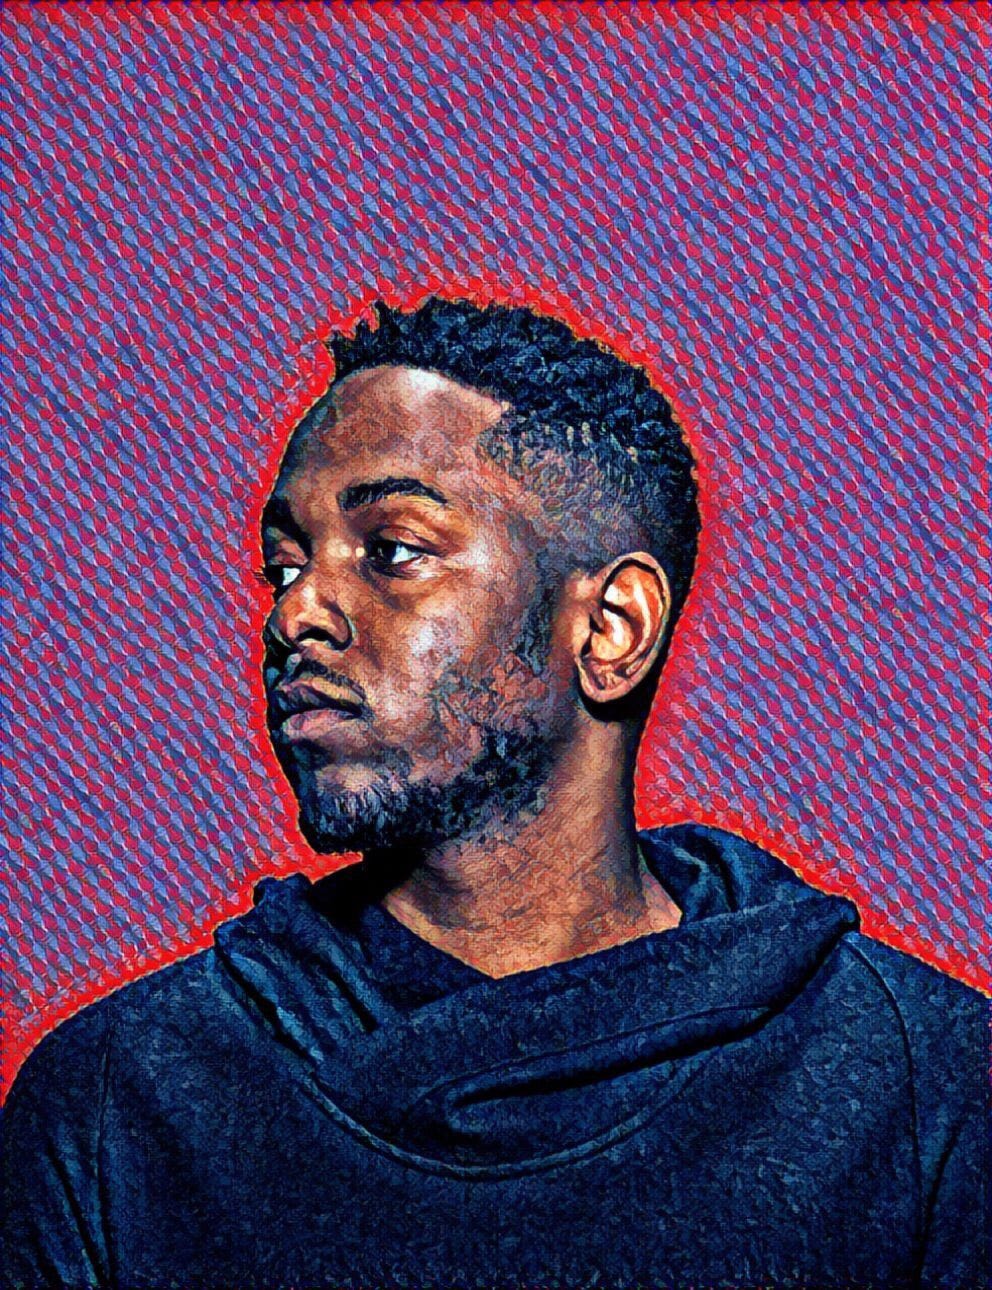 Kendrick Lamar - The Shape of Rap To Come